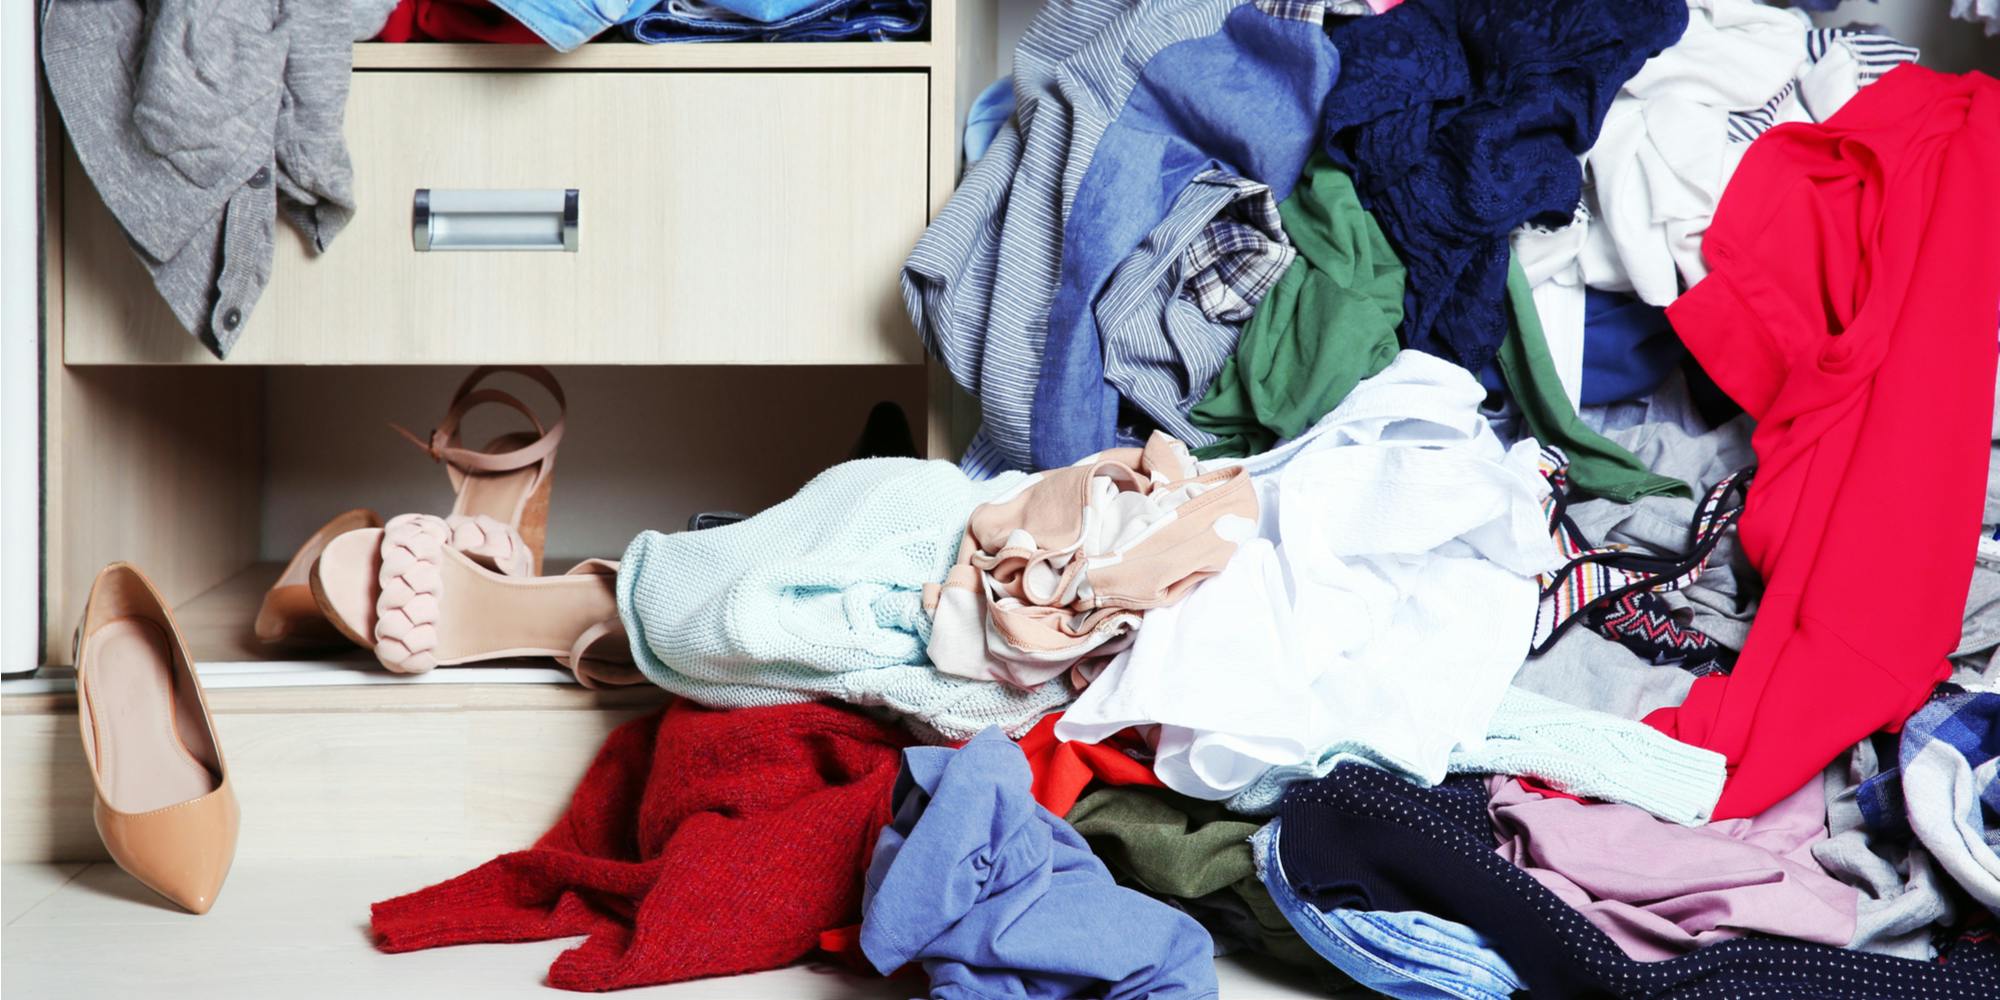 Messy closet self-care newsletter